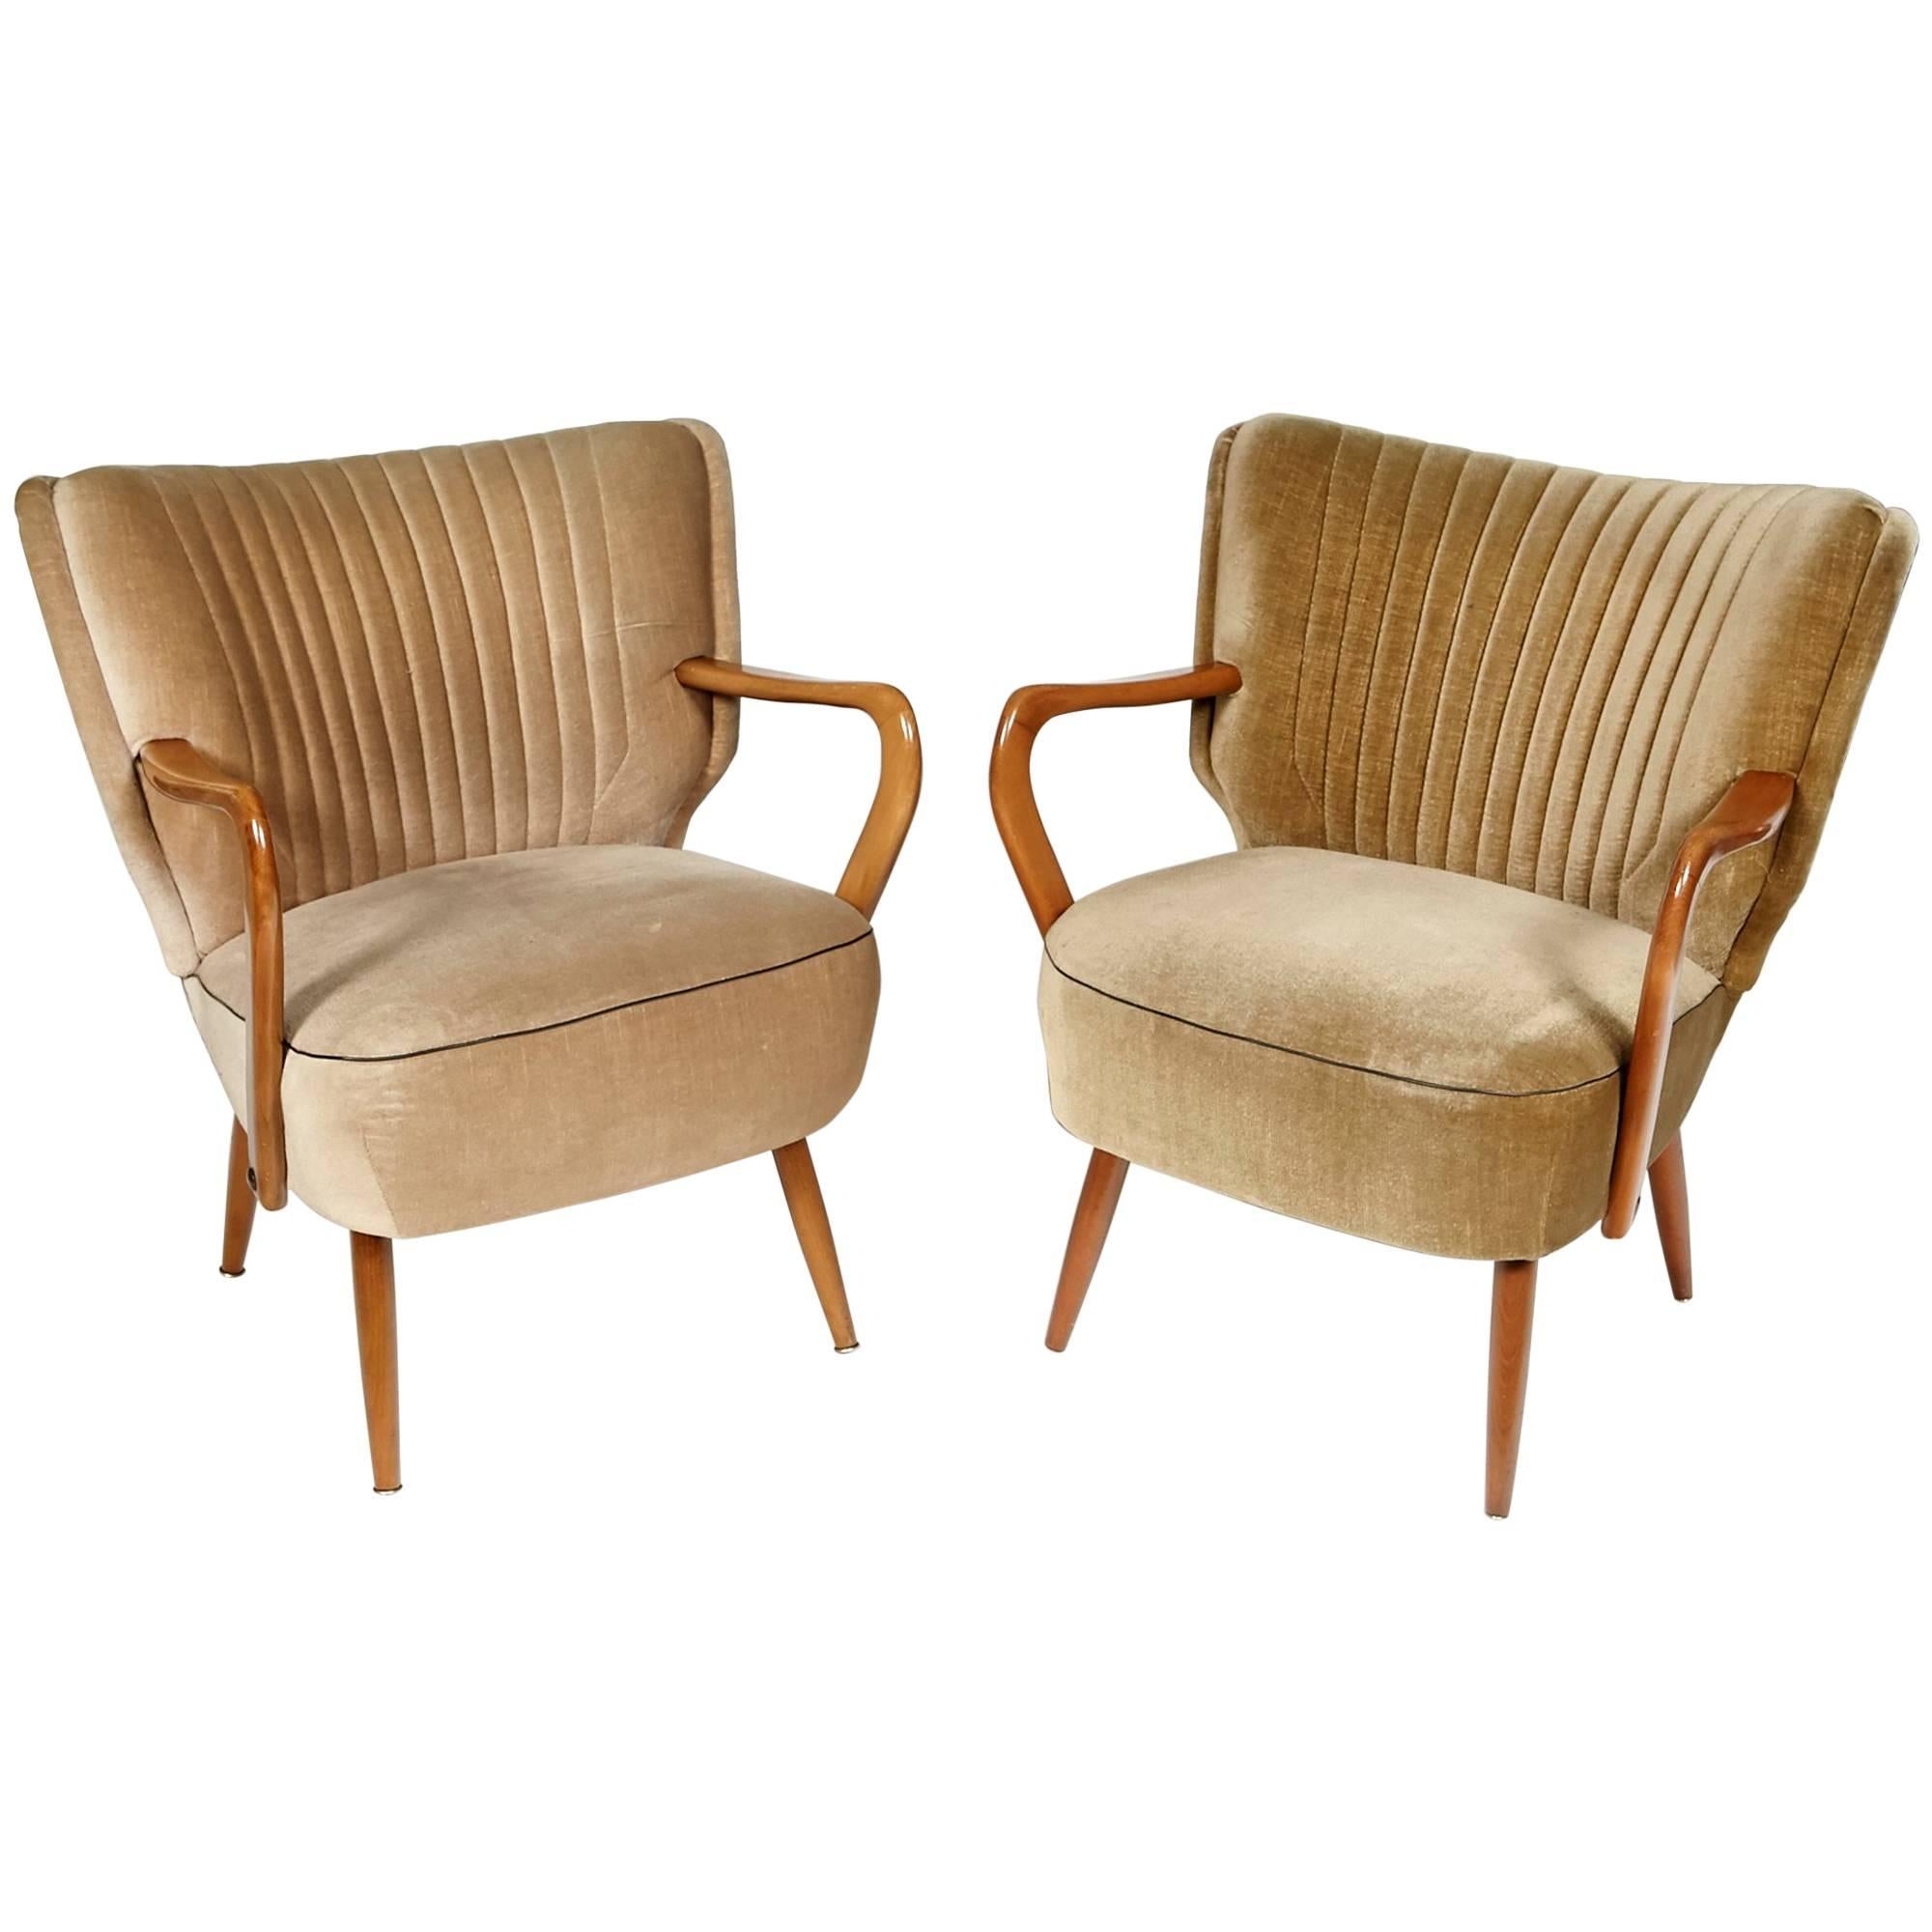 Swedish Pair of Lounge Chairs, 1950s